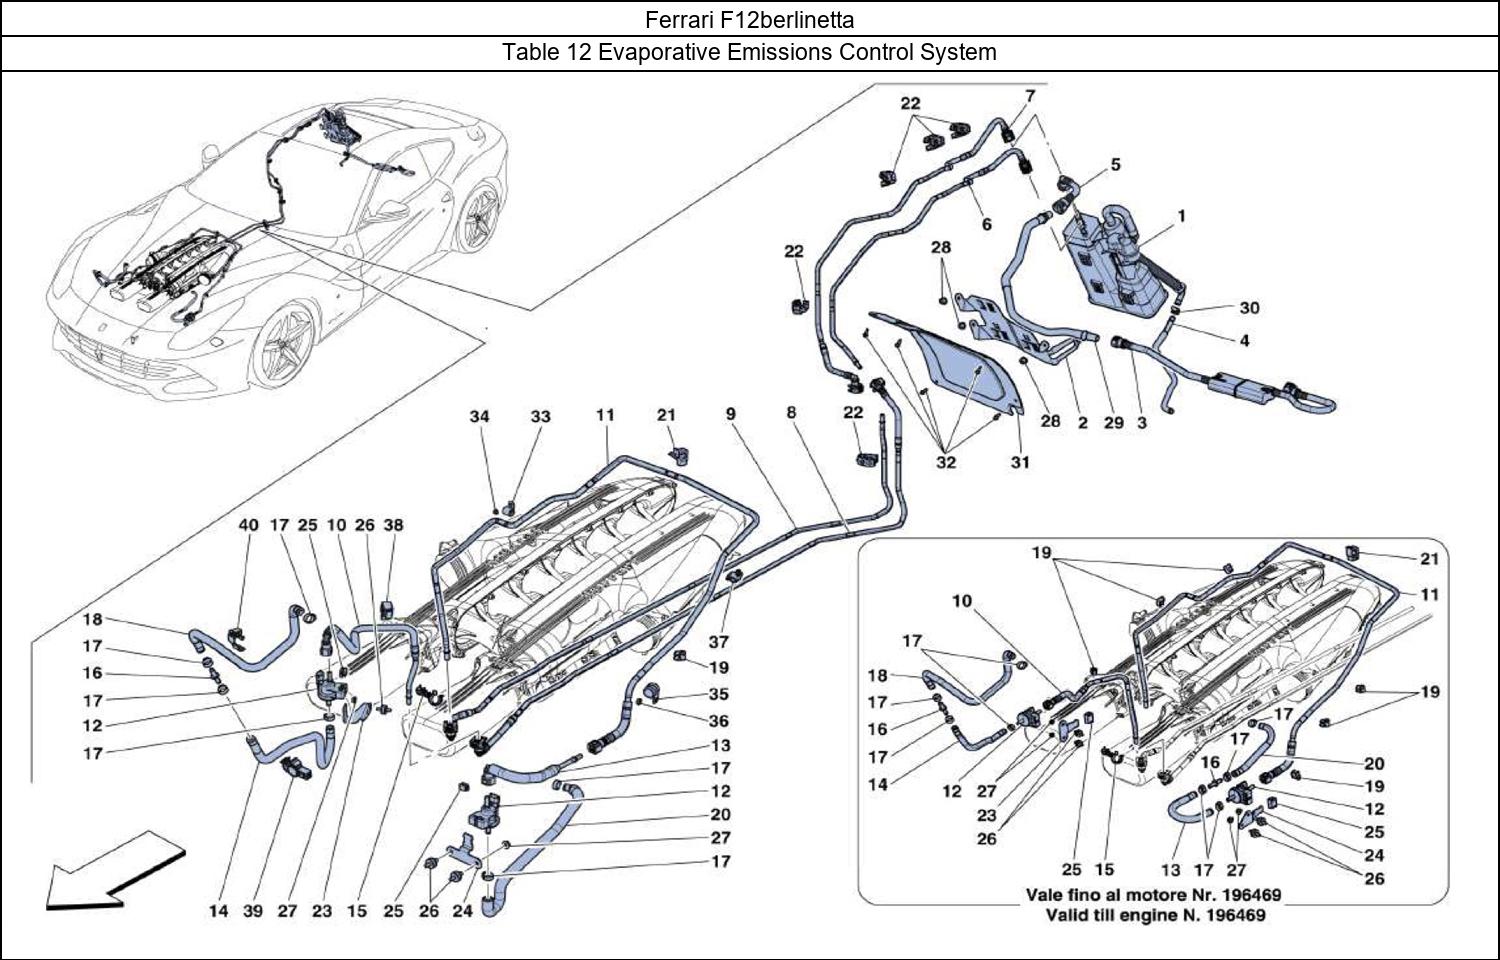 Ferrari Parts Ferrari F12berlinetta Table 12 Evaporative Emissions Control System